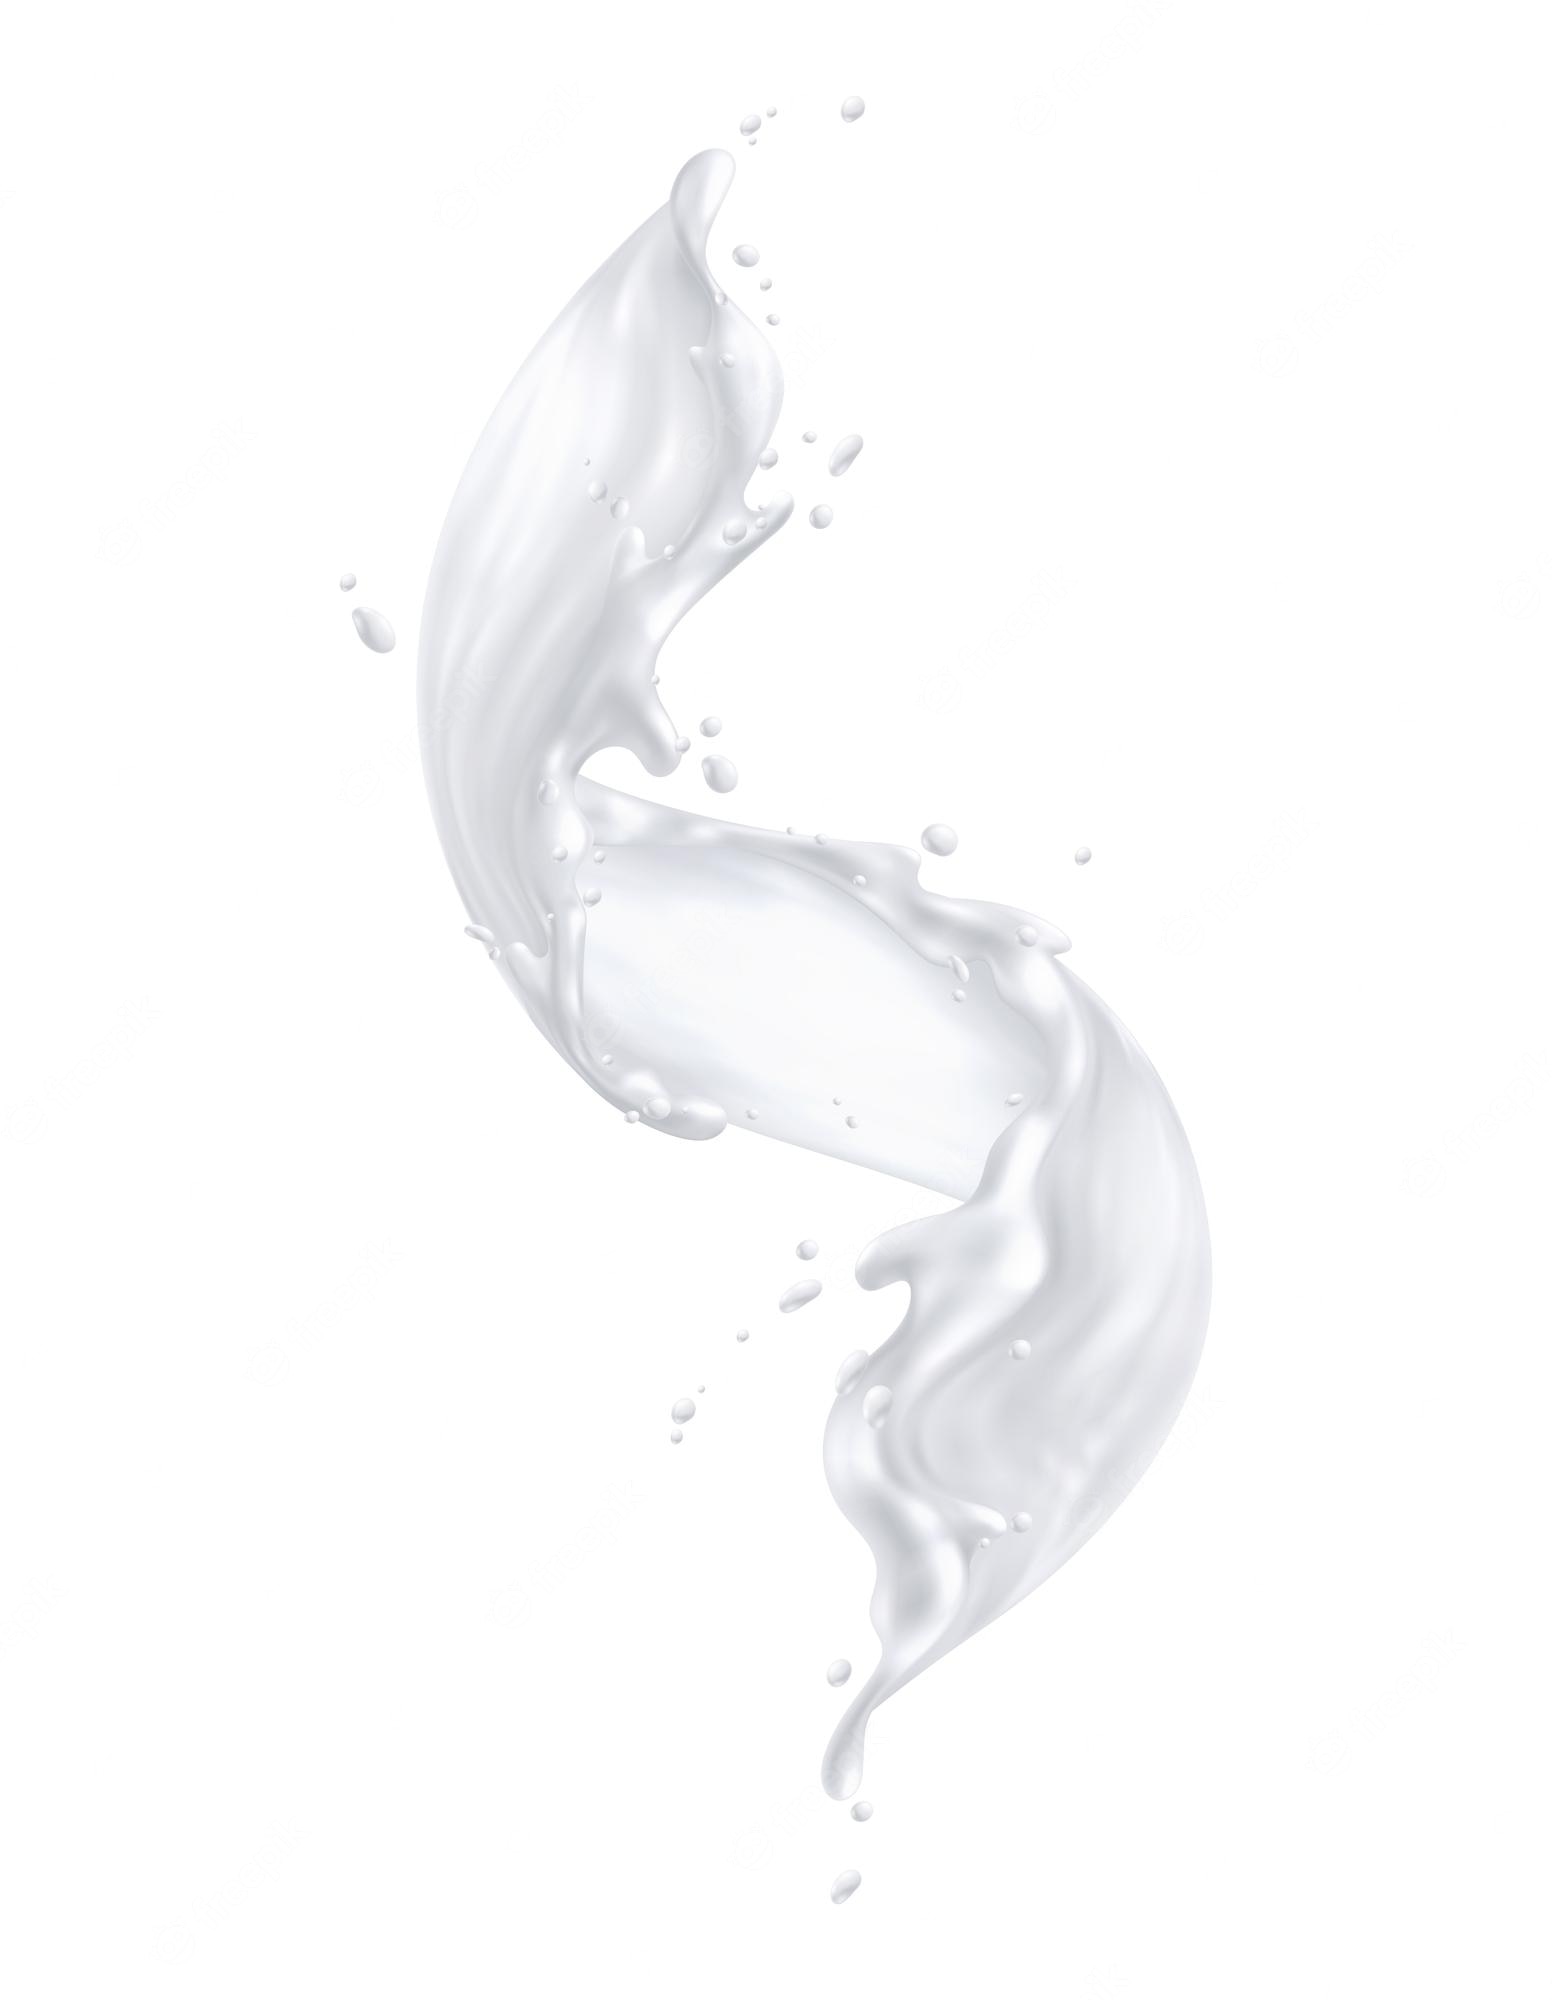 Milk splash Image. Free Vectors, & PSD